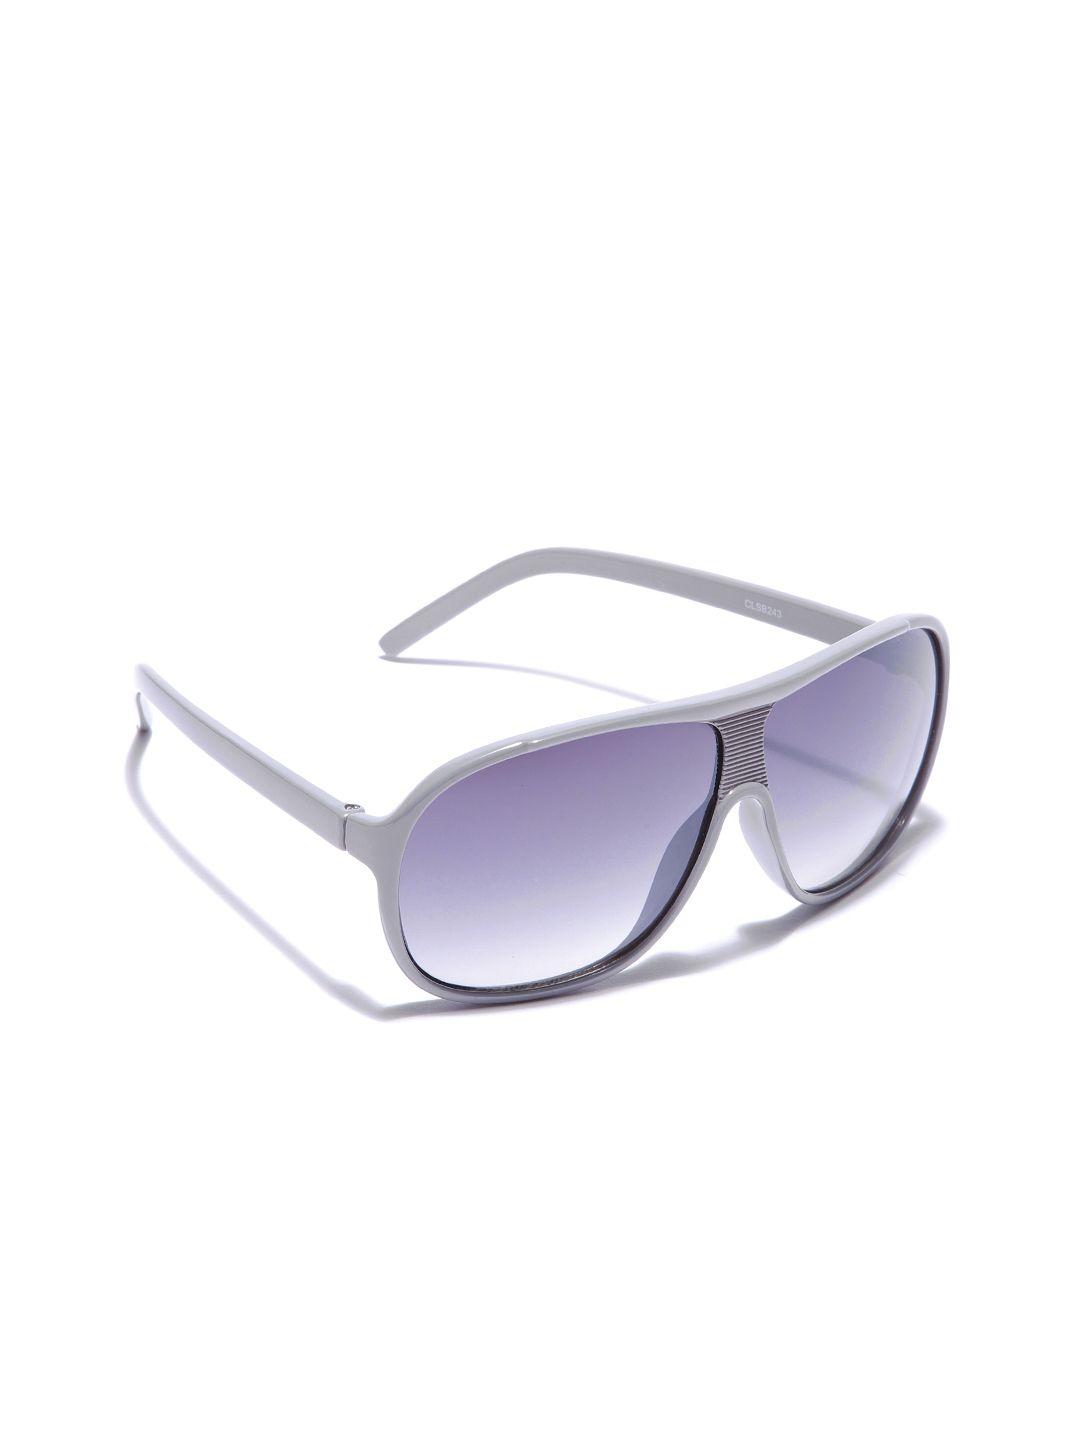 carlton london boys grey lens & black rectangle sunglasses with uv protected lens clsb239